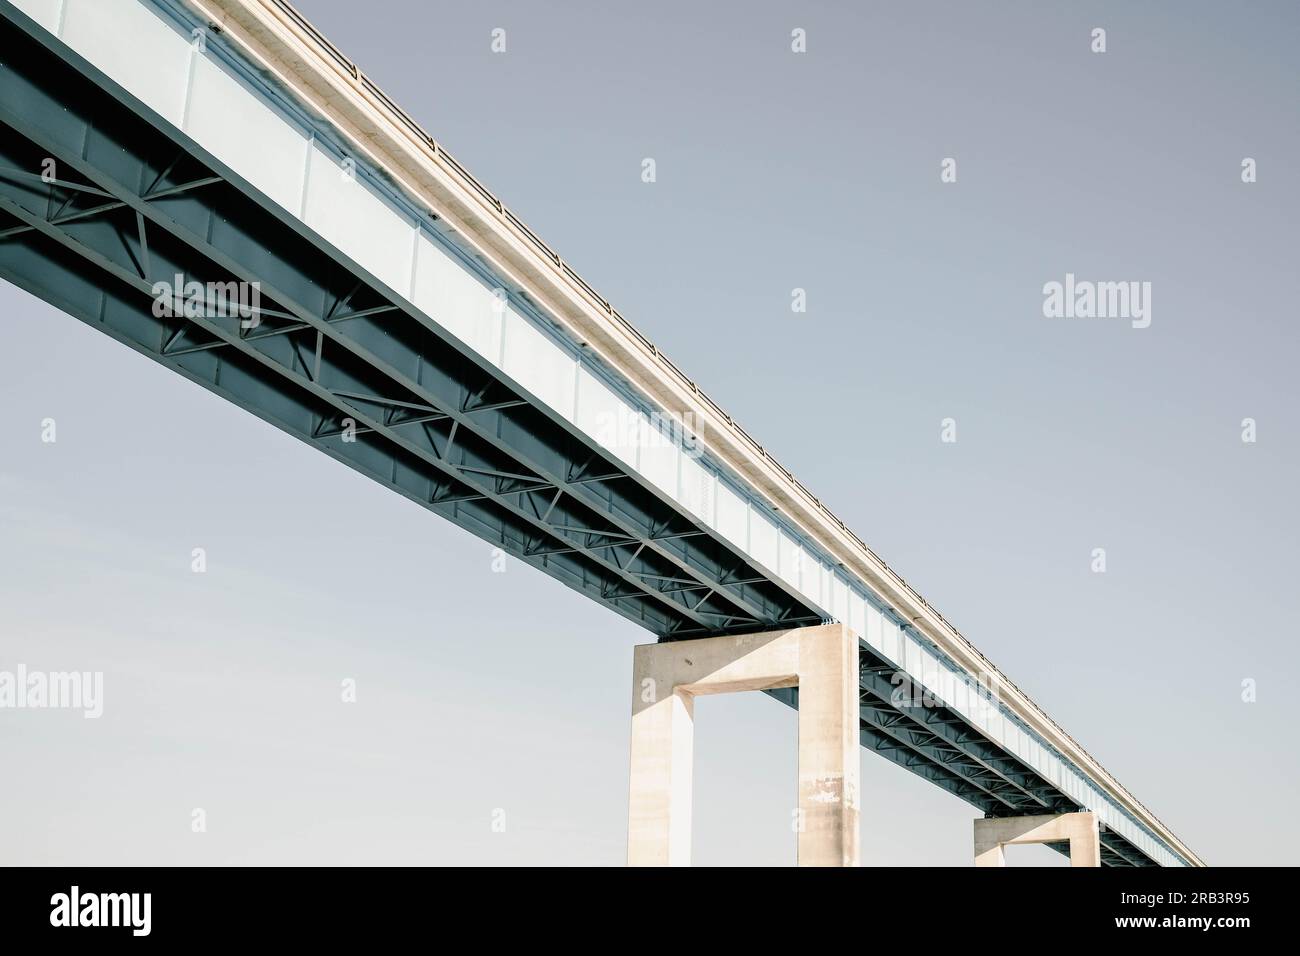 A Tall Bridge in Southern Texas Stock Photo